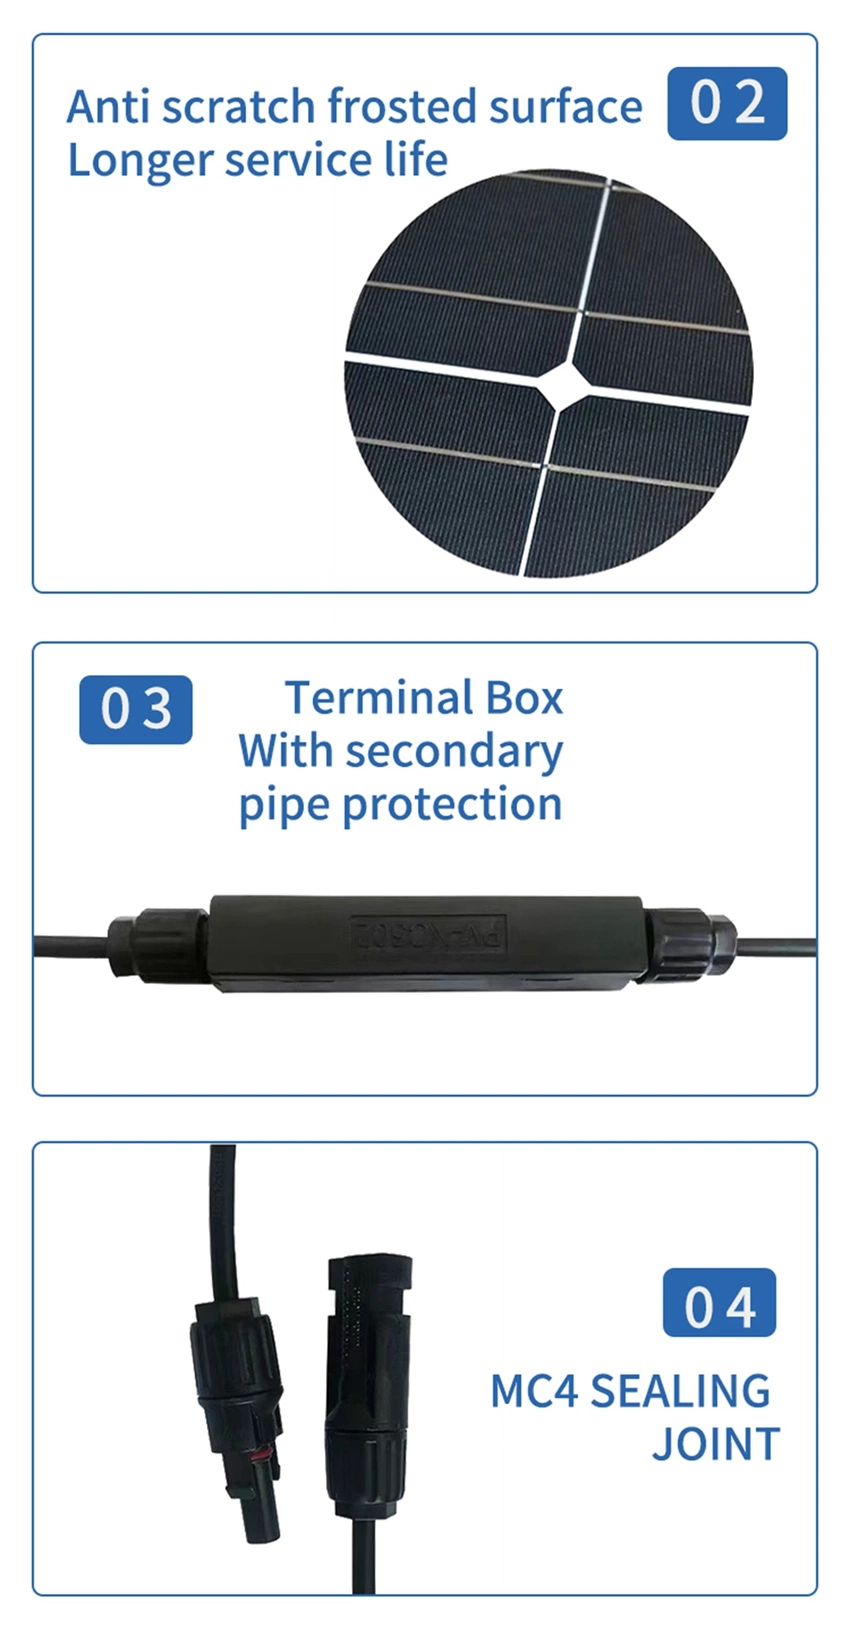 Portable Monocrystalline Silicon Flexible Solar Panel RV Camping